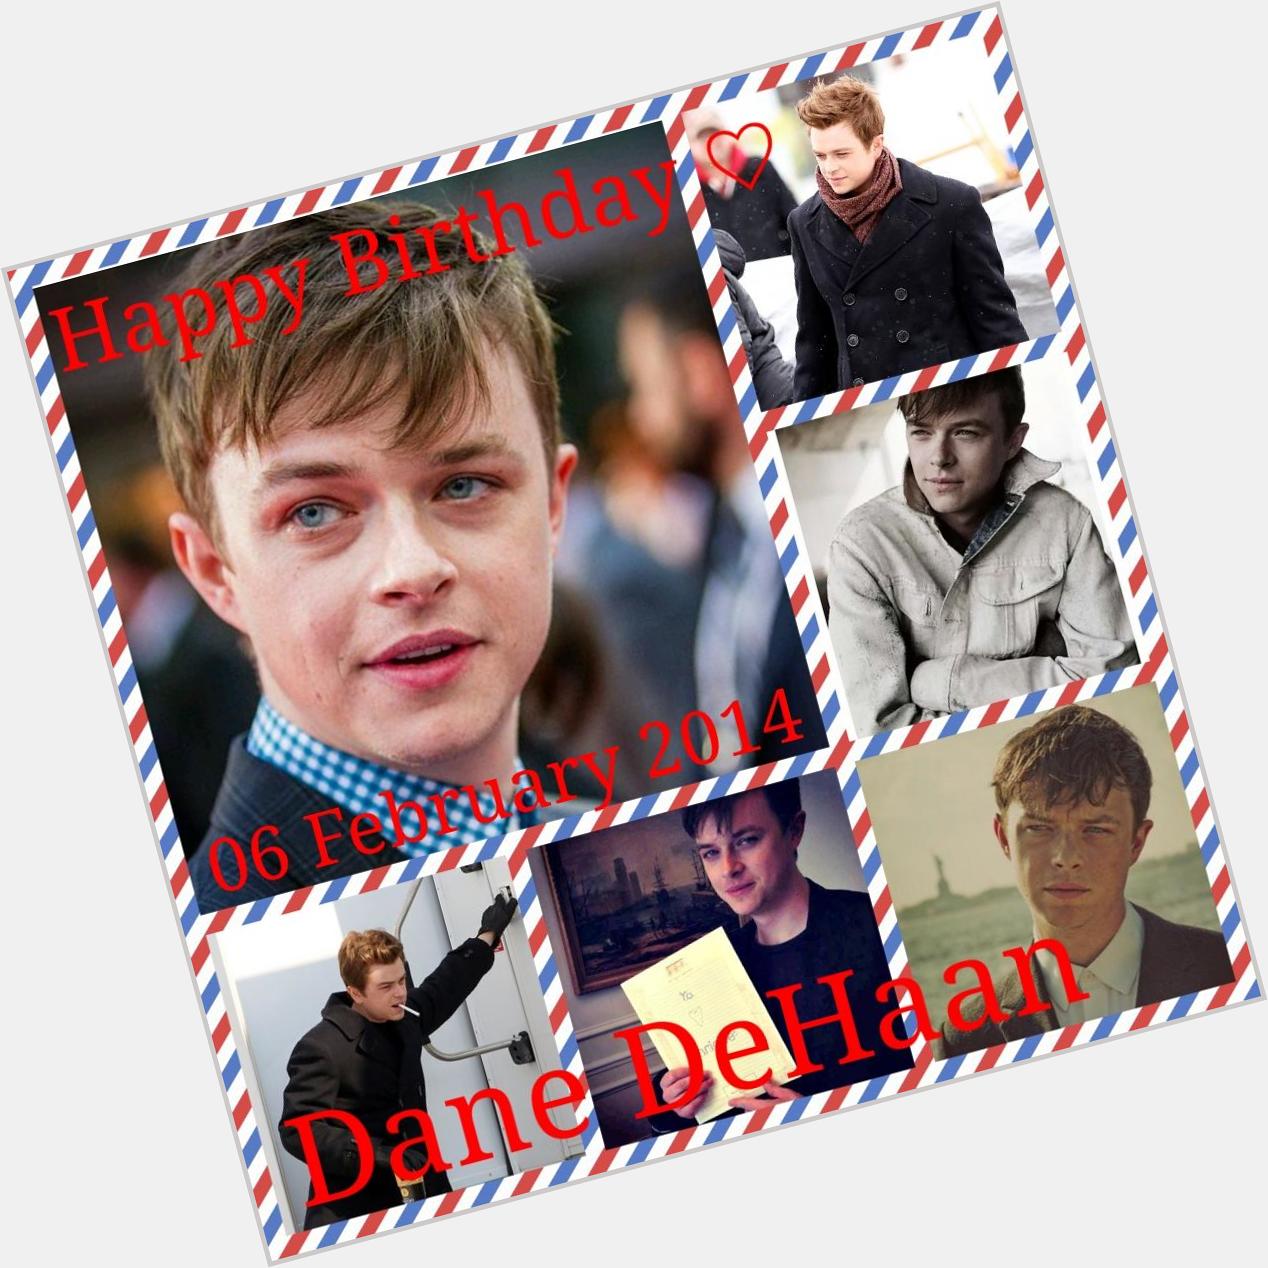  Happy Birthday Dane DeHaan I wish you all the best :\") 